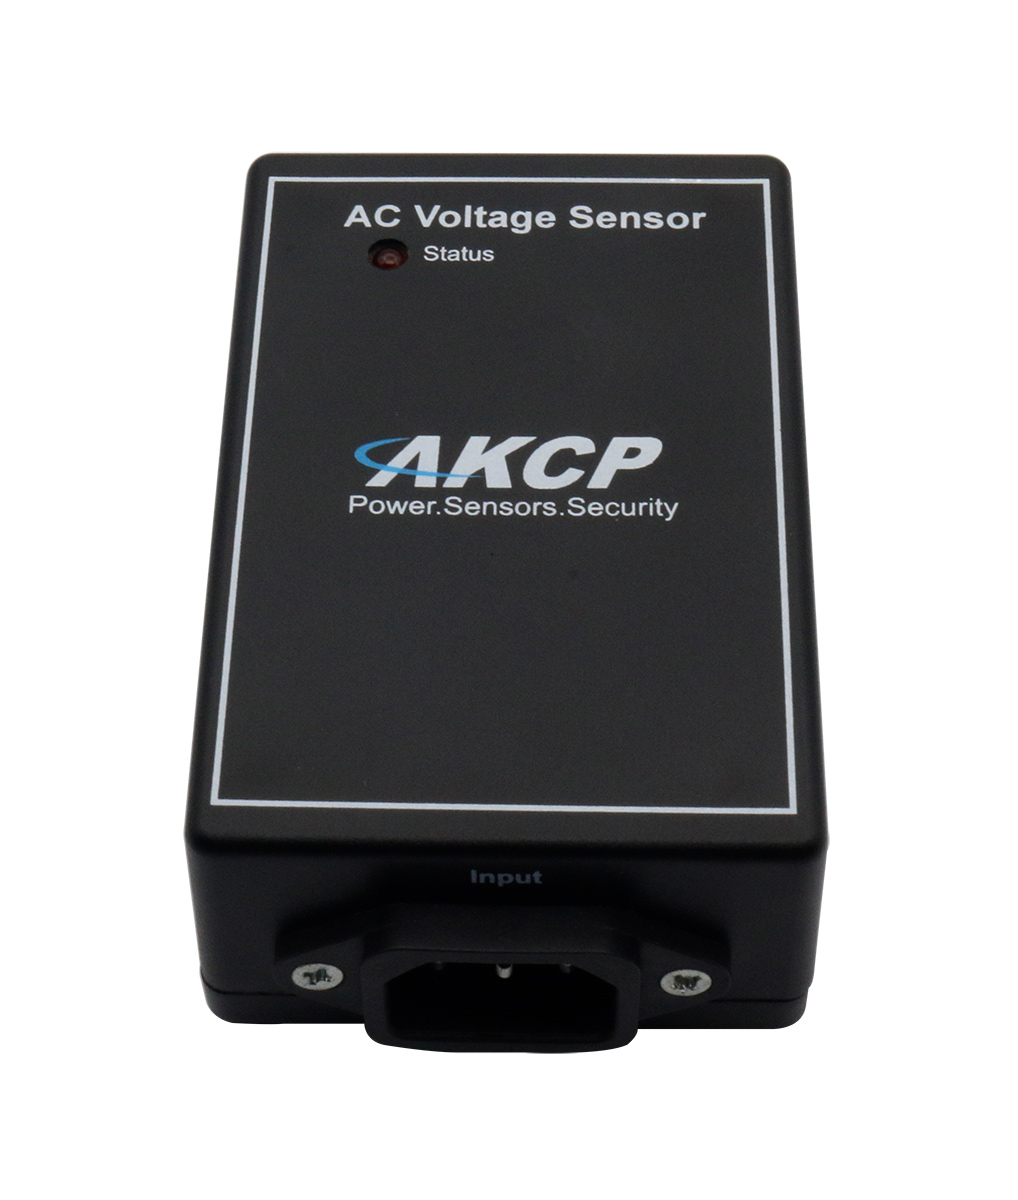 AKCP - ACV15 - AC Voltage Sensor